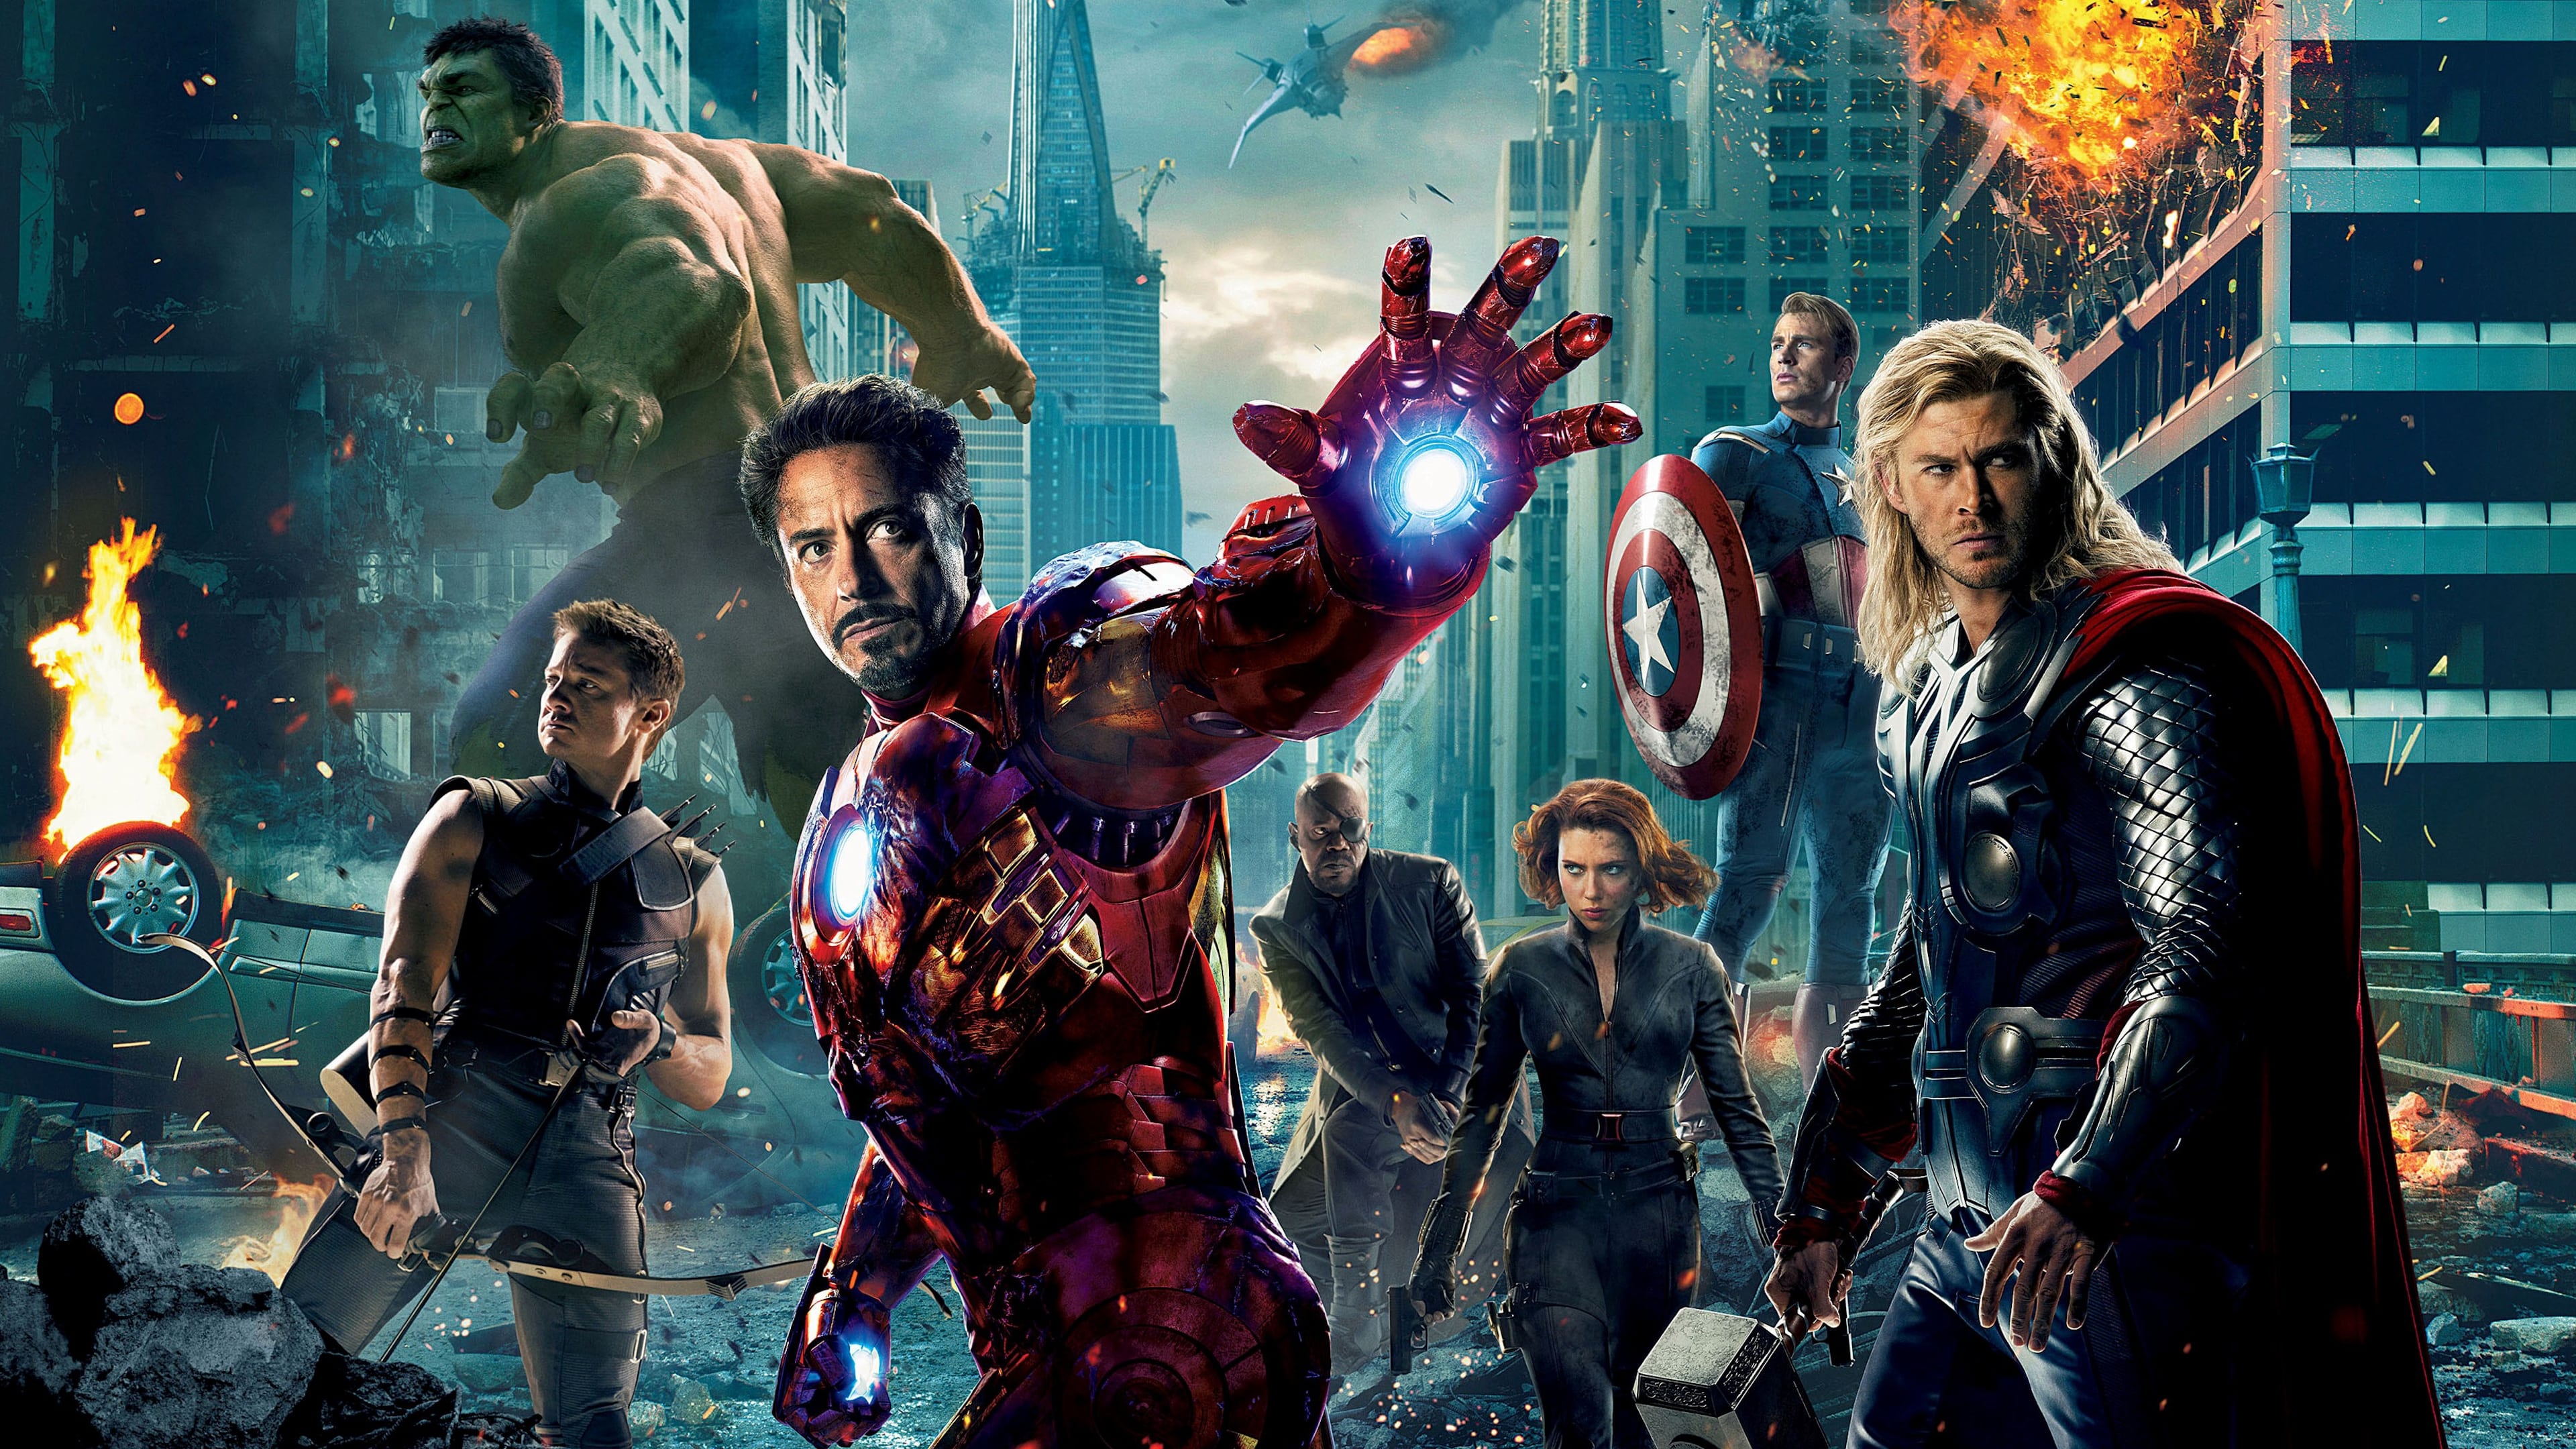 Marvel’s The Avengers : ดิ อเวนเจอร์ส (2012) พากย์ไทย